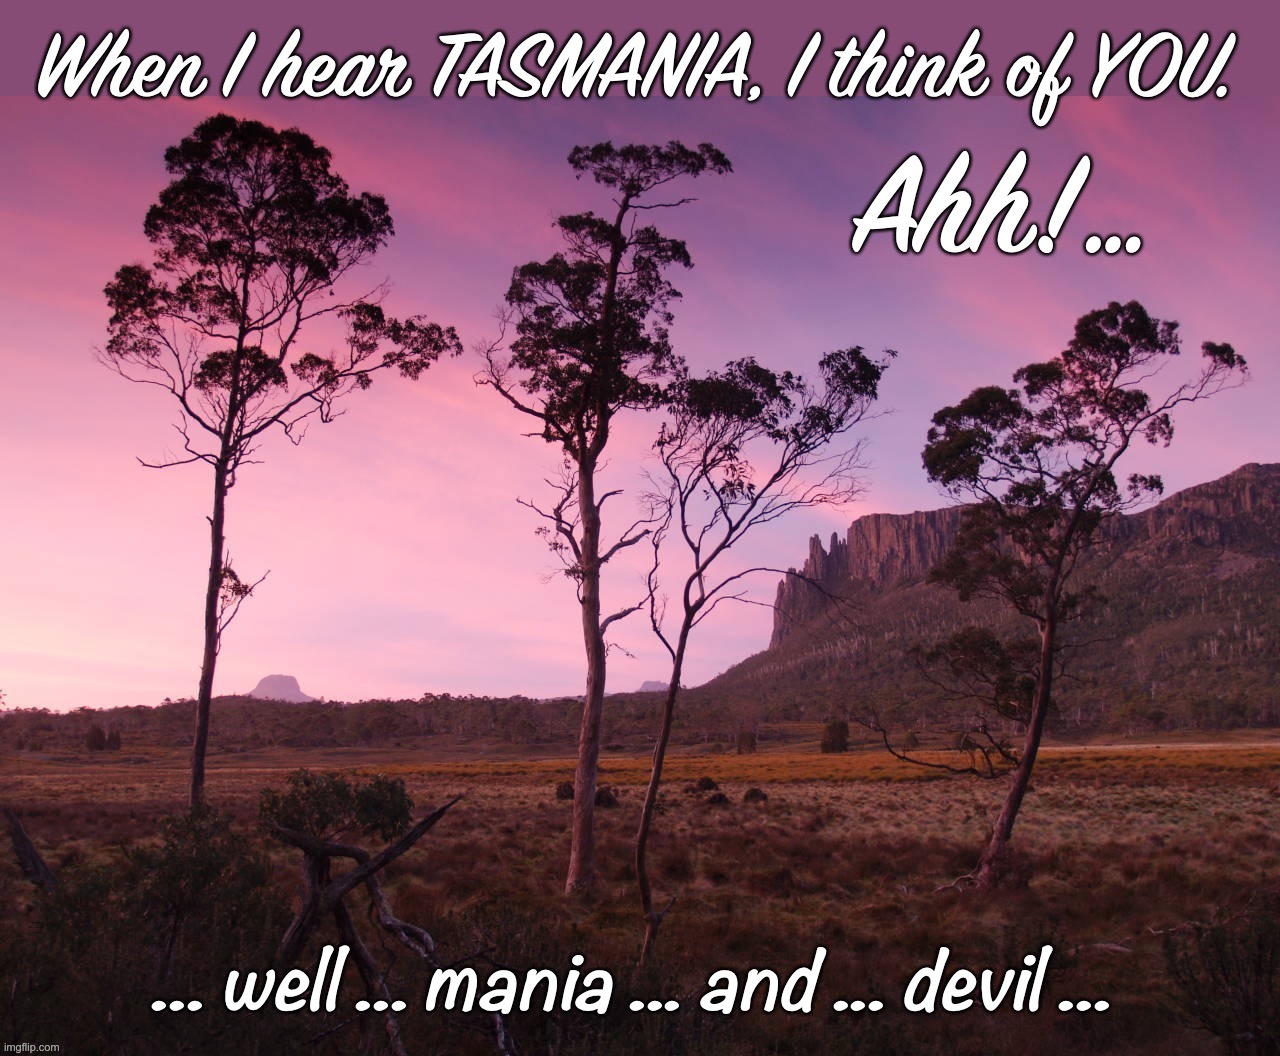 Ah, TASMANIA! | When I hear TASMANIA, I think of YOU. Ahh!... ... well ... mania ... and ... devil ... | image tagged in maniac,devil,tasmania,landscape,dark humor,rick75230 | made w/ Imgflip meme maker